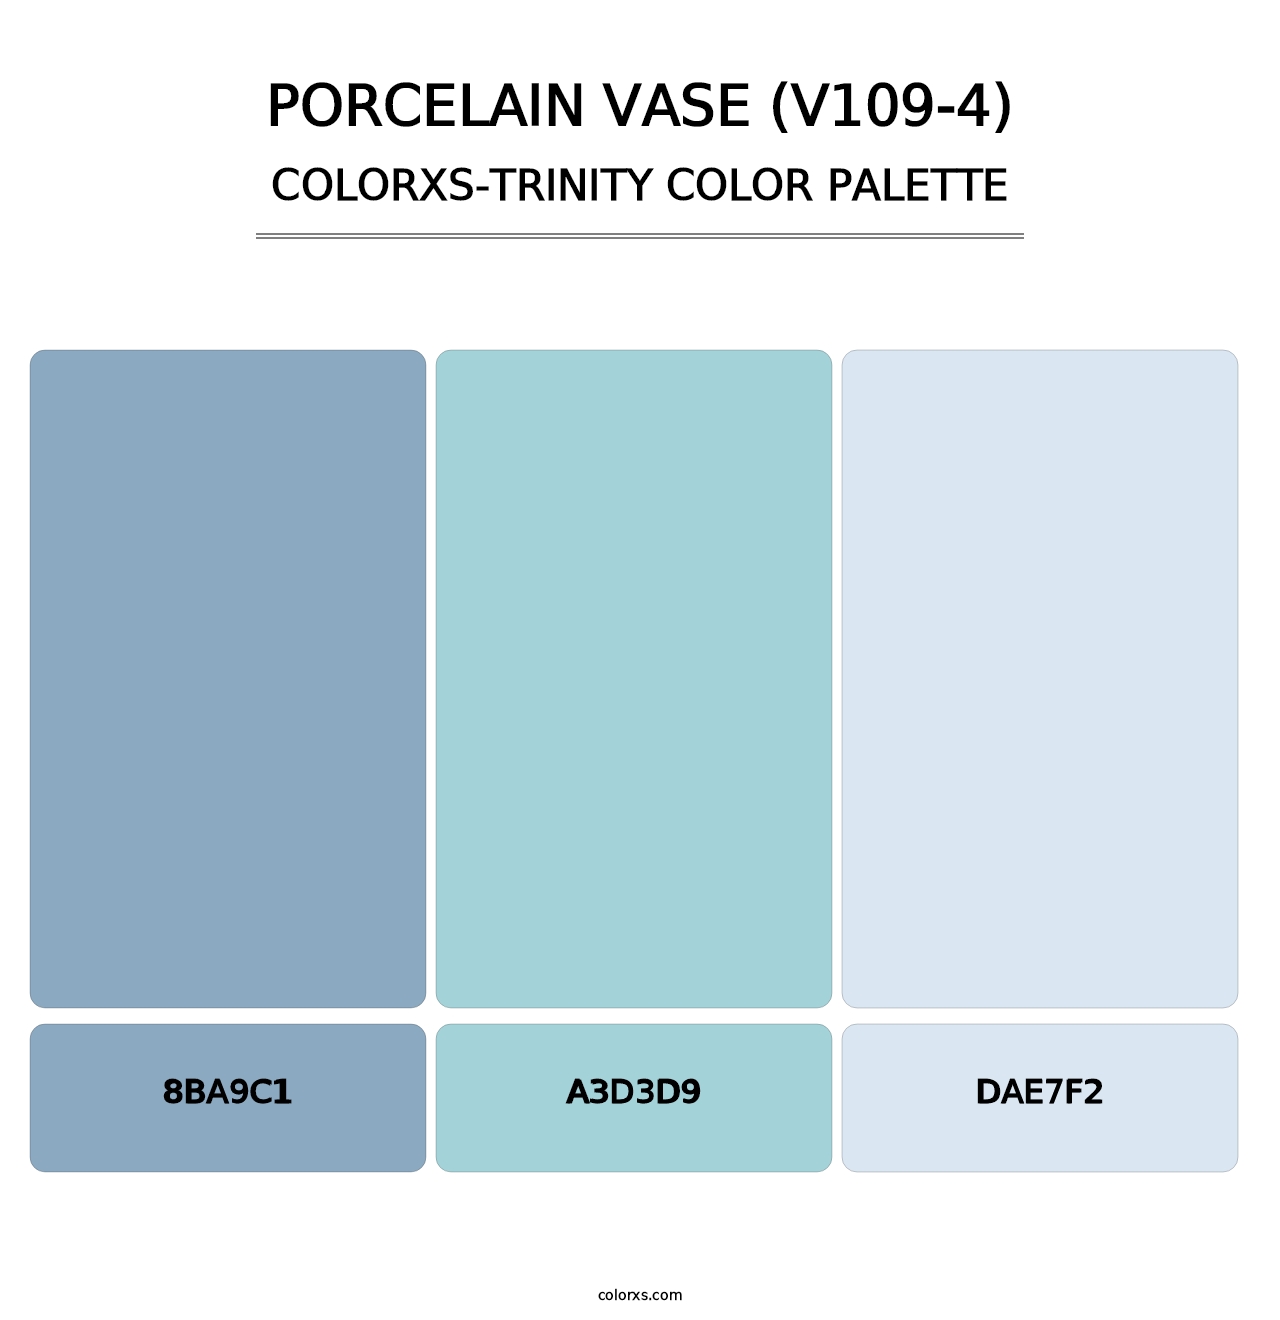 Porcelain Vase (V109-4) - Colorxs Trinity Palette